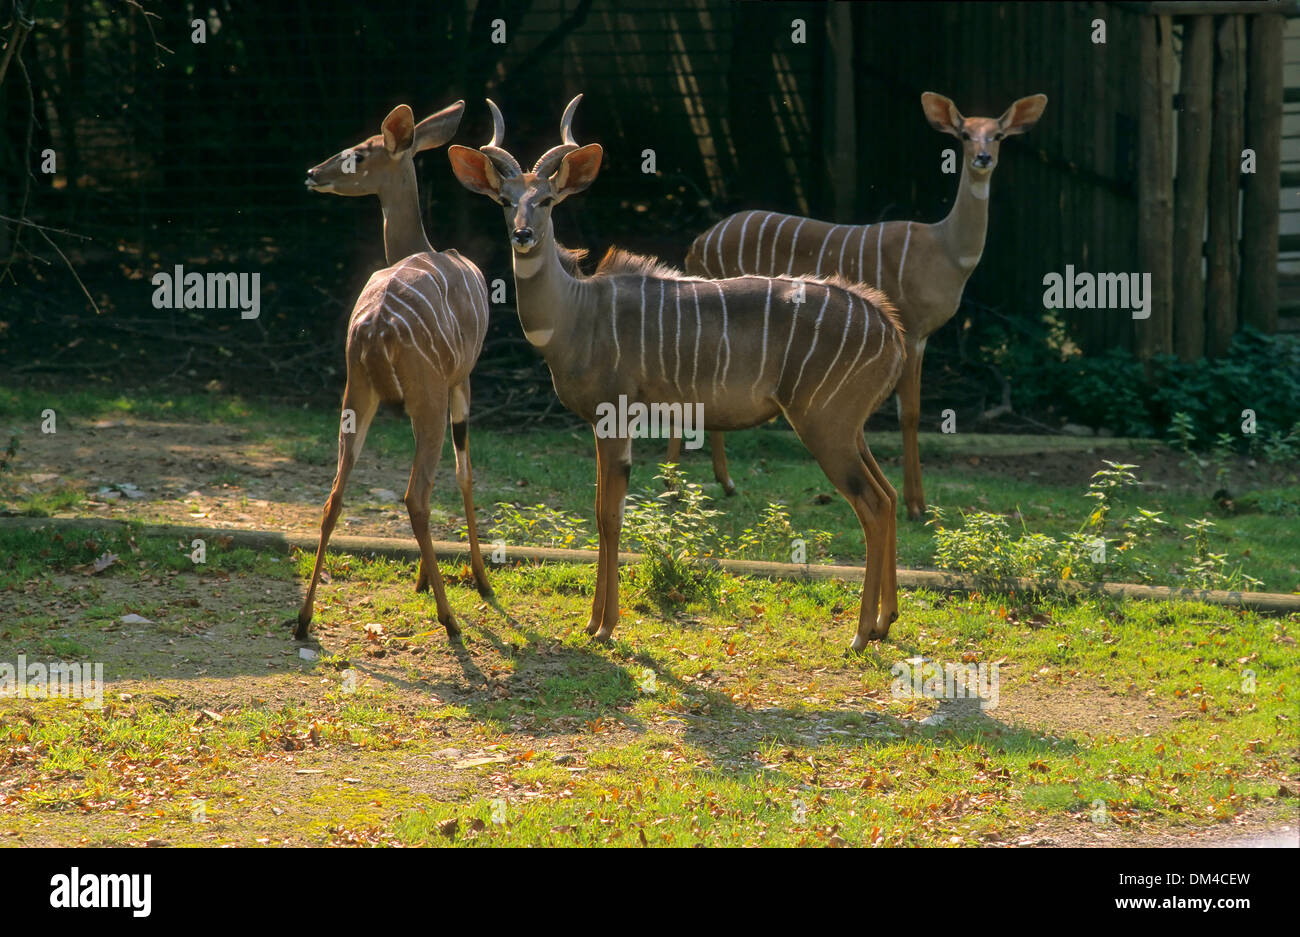 lesser kudu (Ammelaphus imberbis) Zoo: Kleiner Kudu (Tragelaphus imberbis) Stock Photo